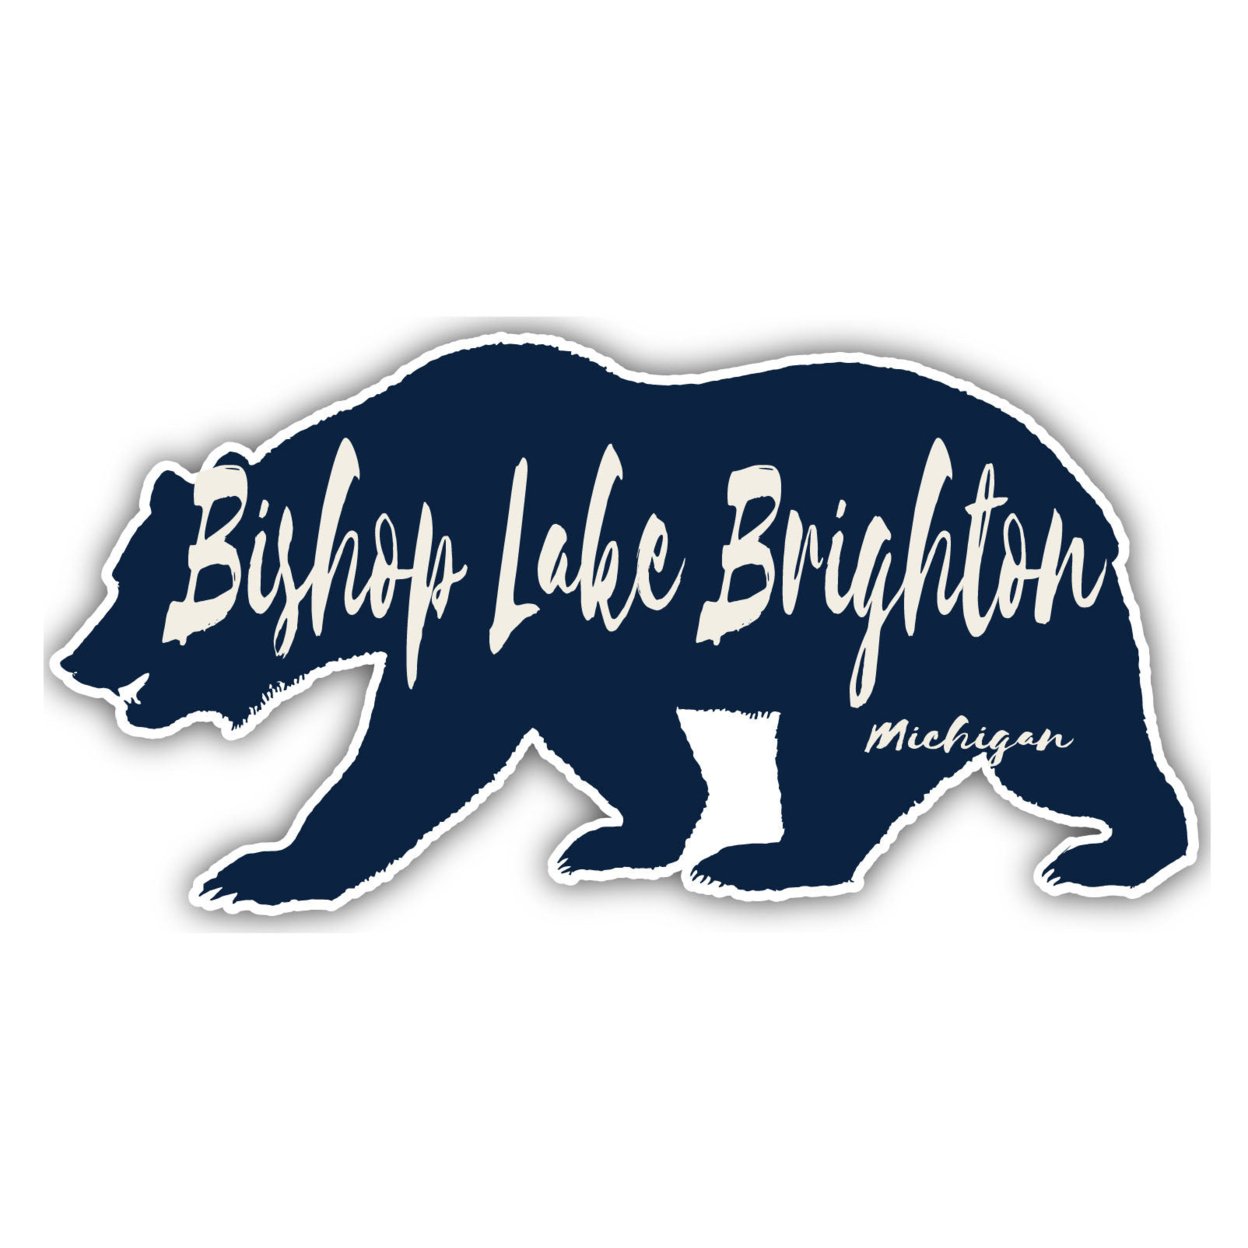 Bishop Lake Brighton Michigan Souvenir Decorative Stickers (Choose Theme And Size) - 4-Pack, 6-Inch, Bear